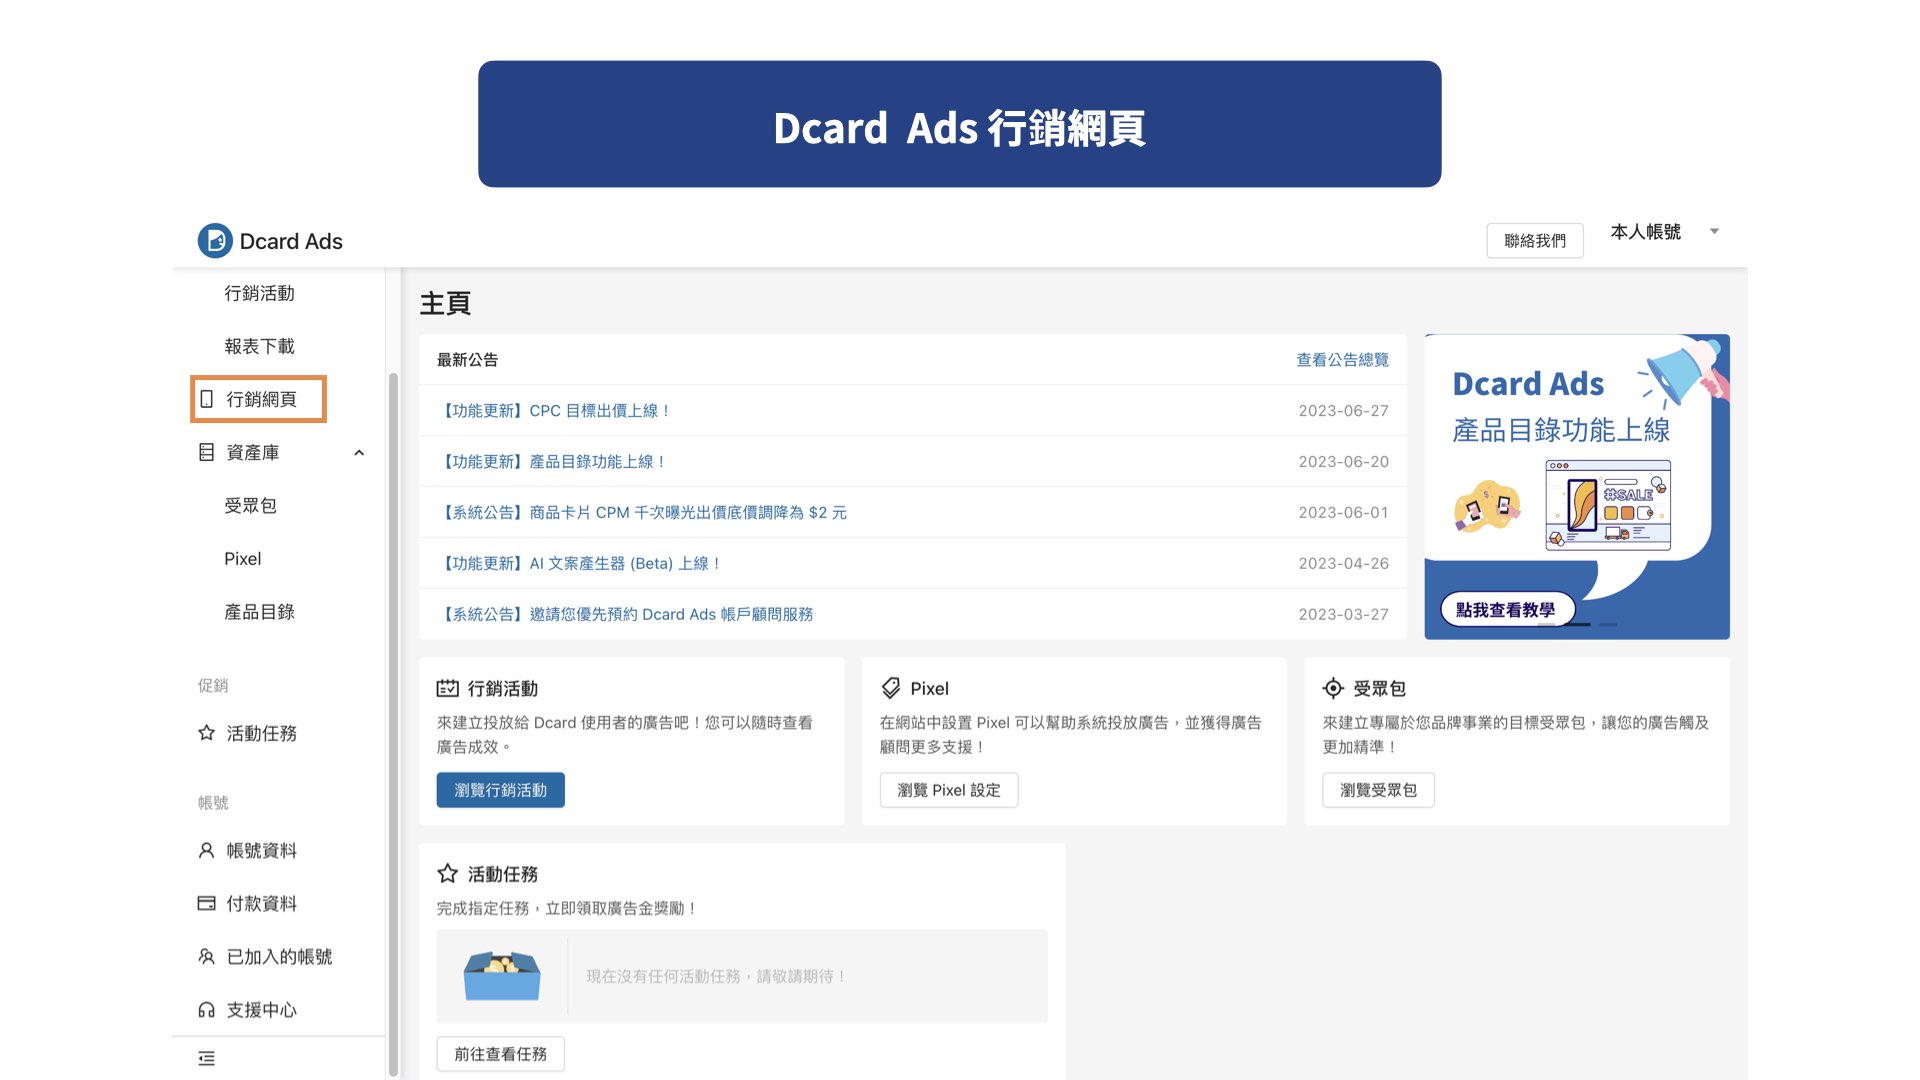 Dcard Ads 行銷網頁